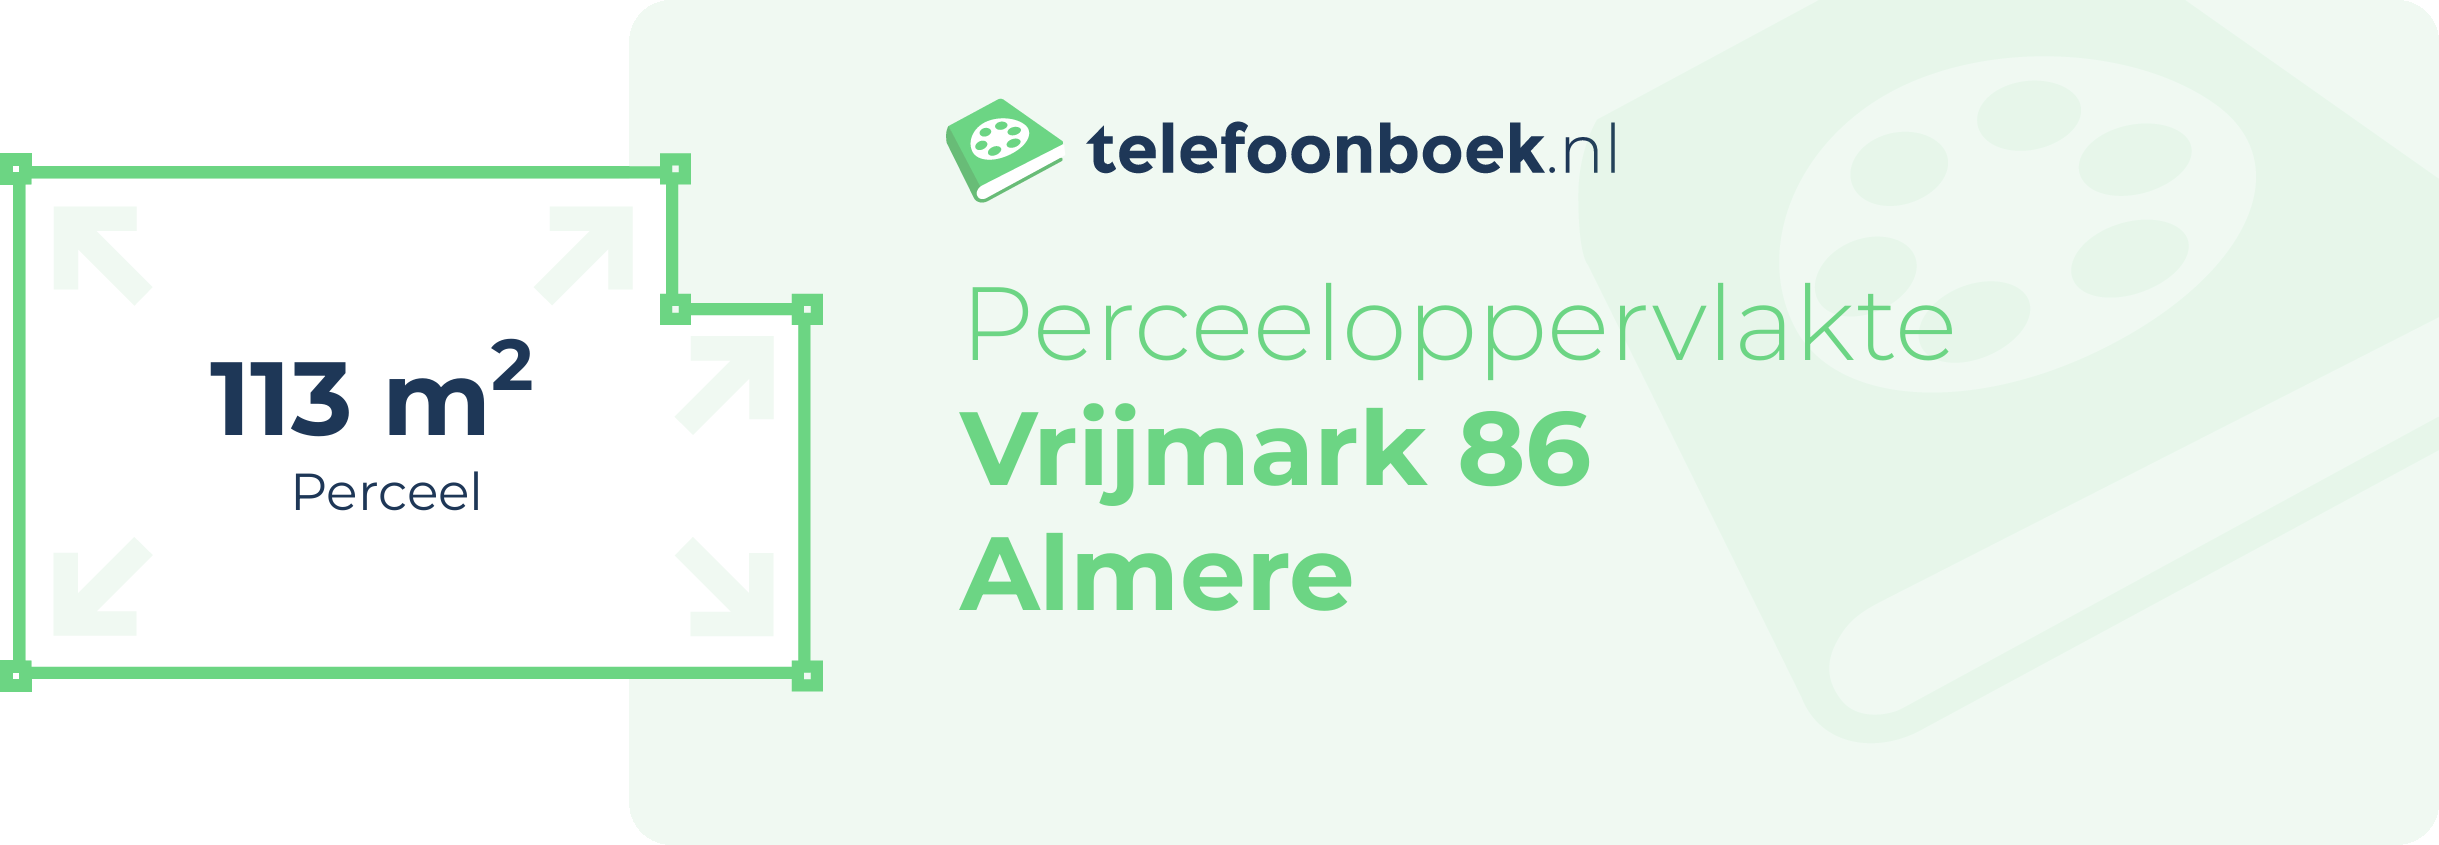 Perceeloppervlakte Vrijmark 86 Almere